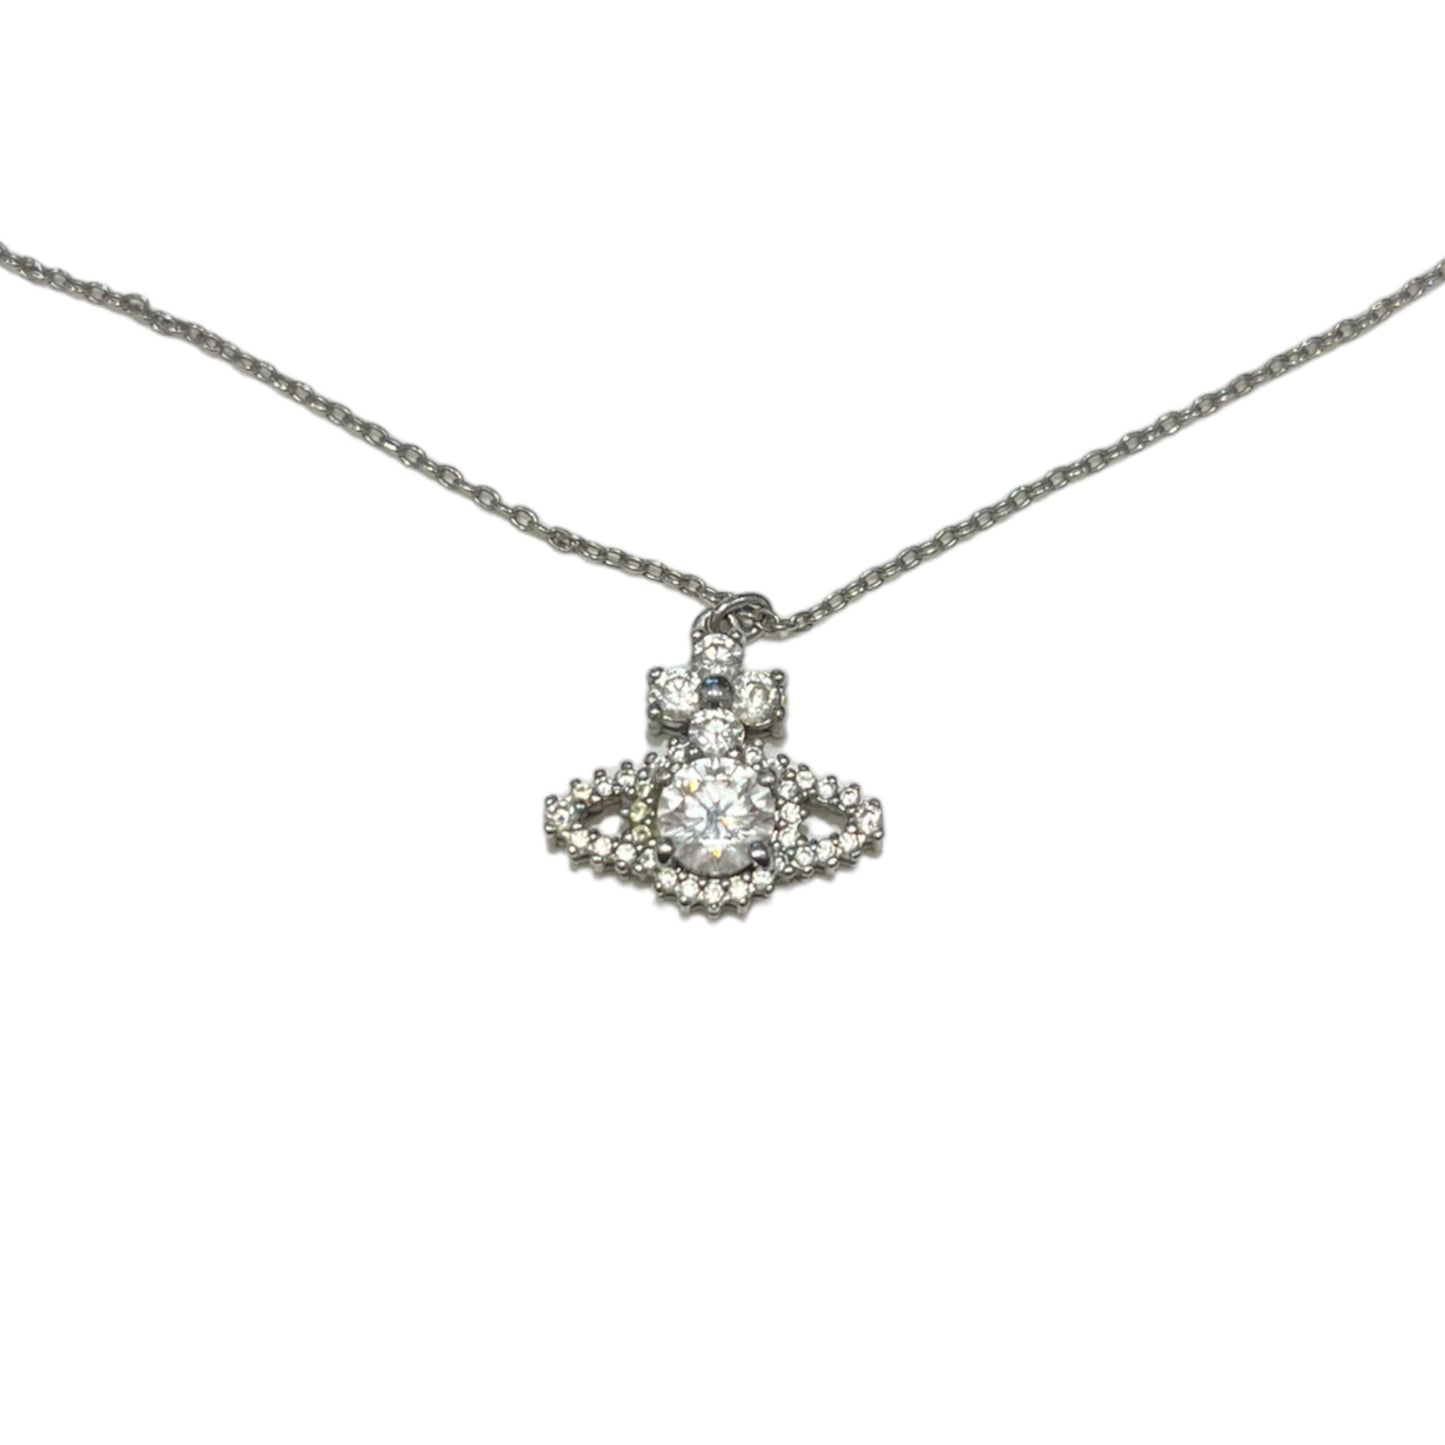 Vivienne Westwood Silver Necklace